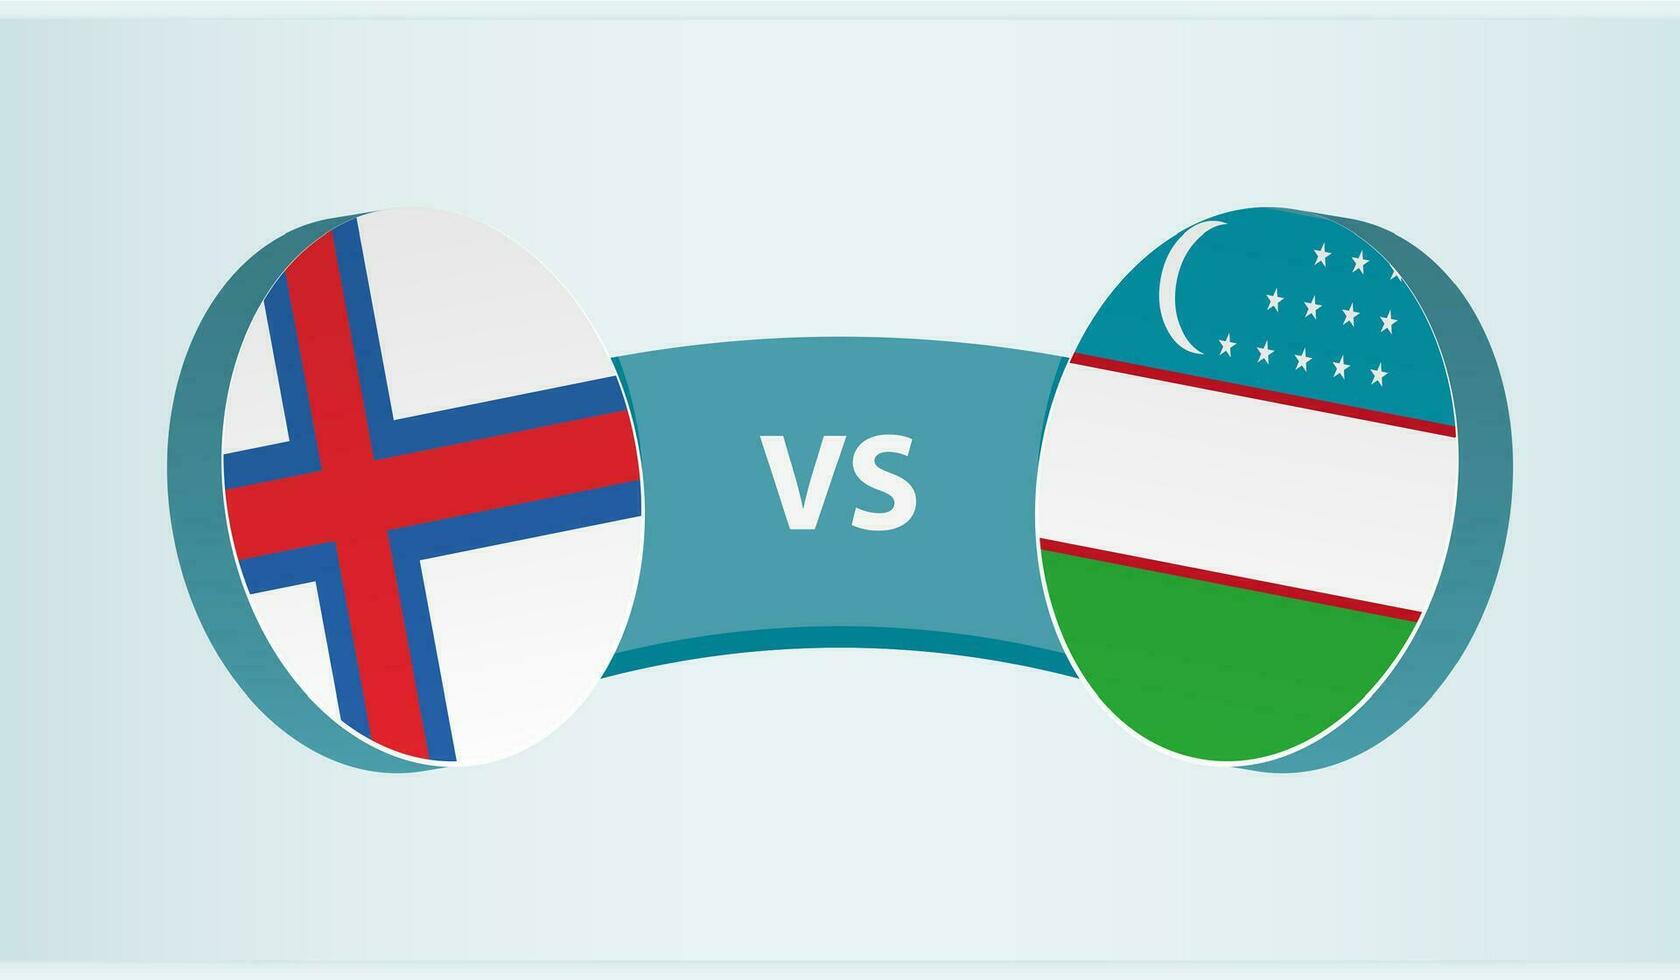 Faroe Islands versus Uzbekistan, team sports competition concept. vector